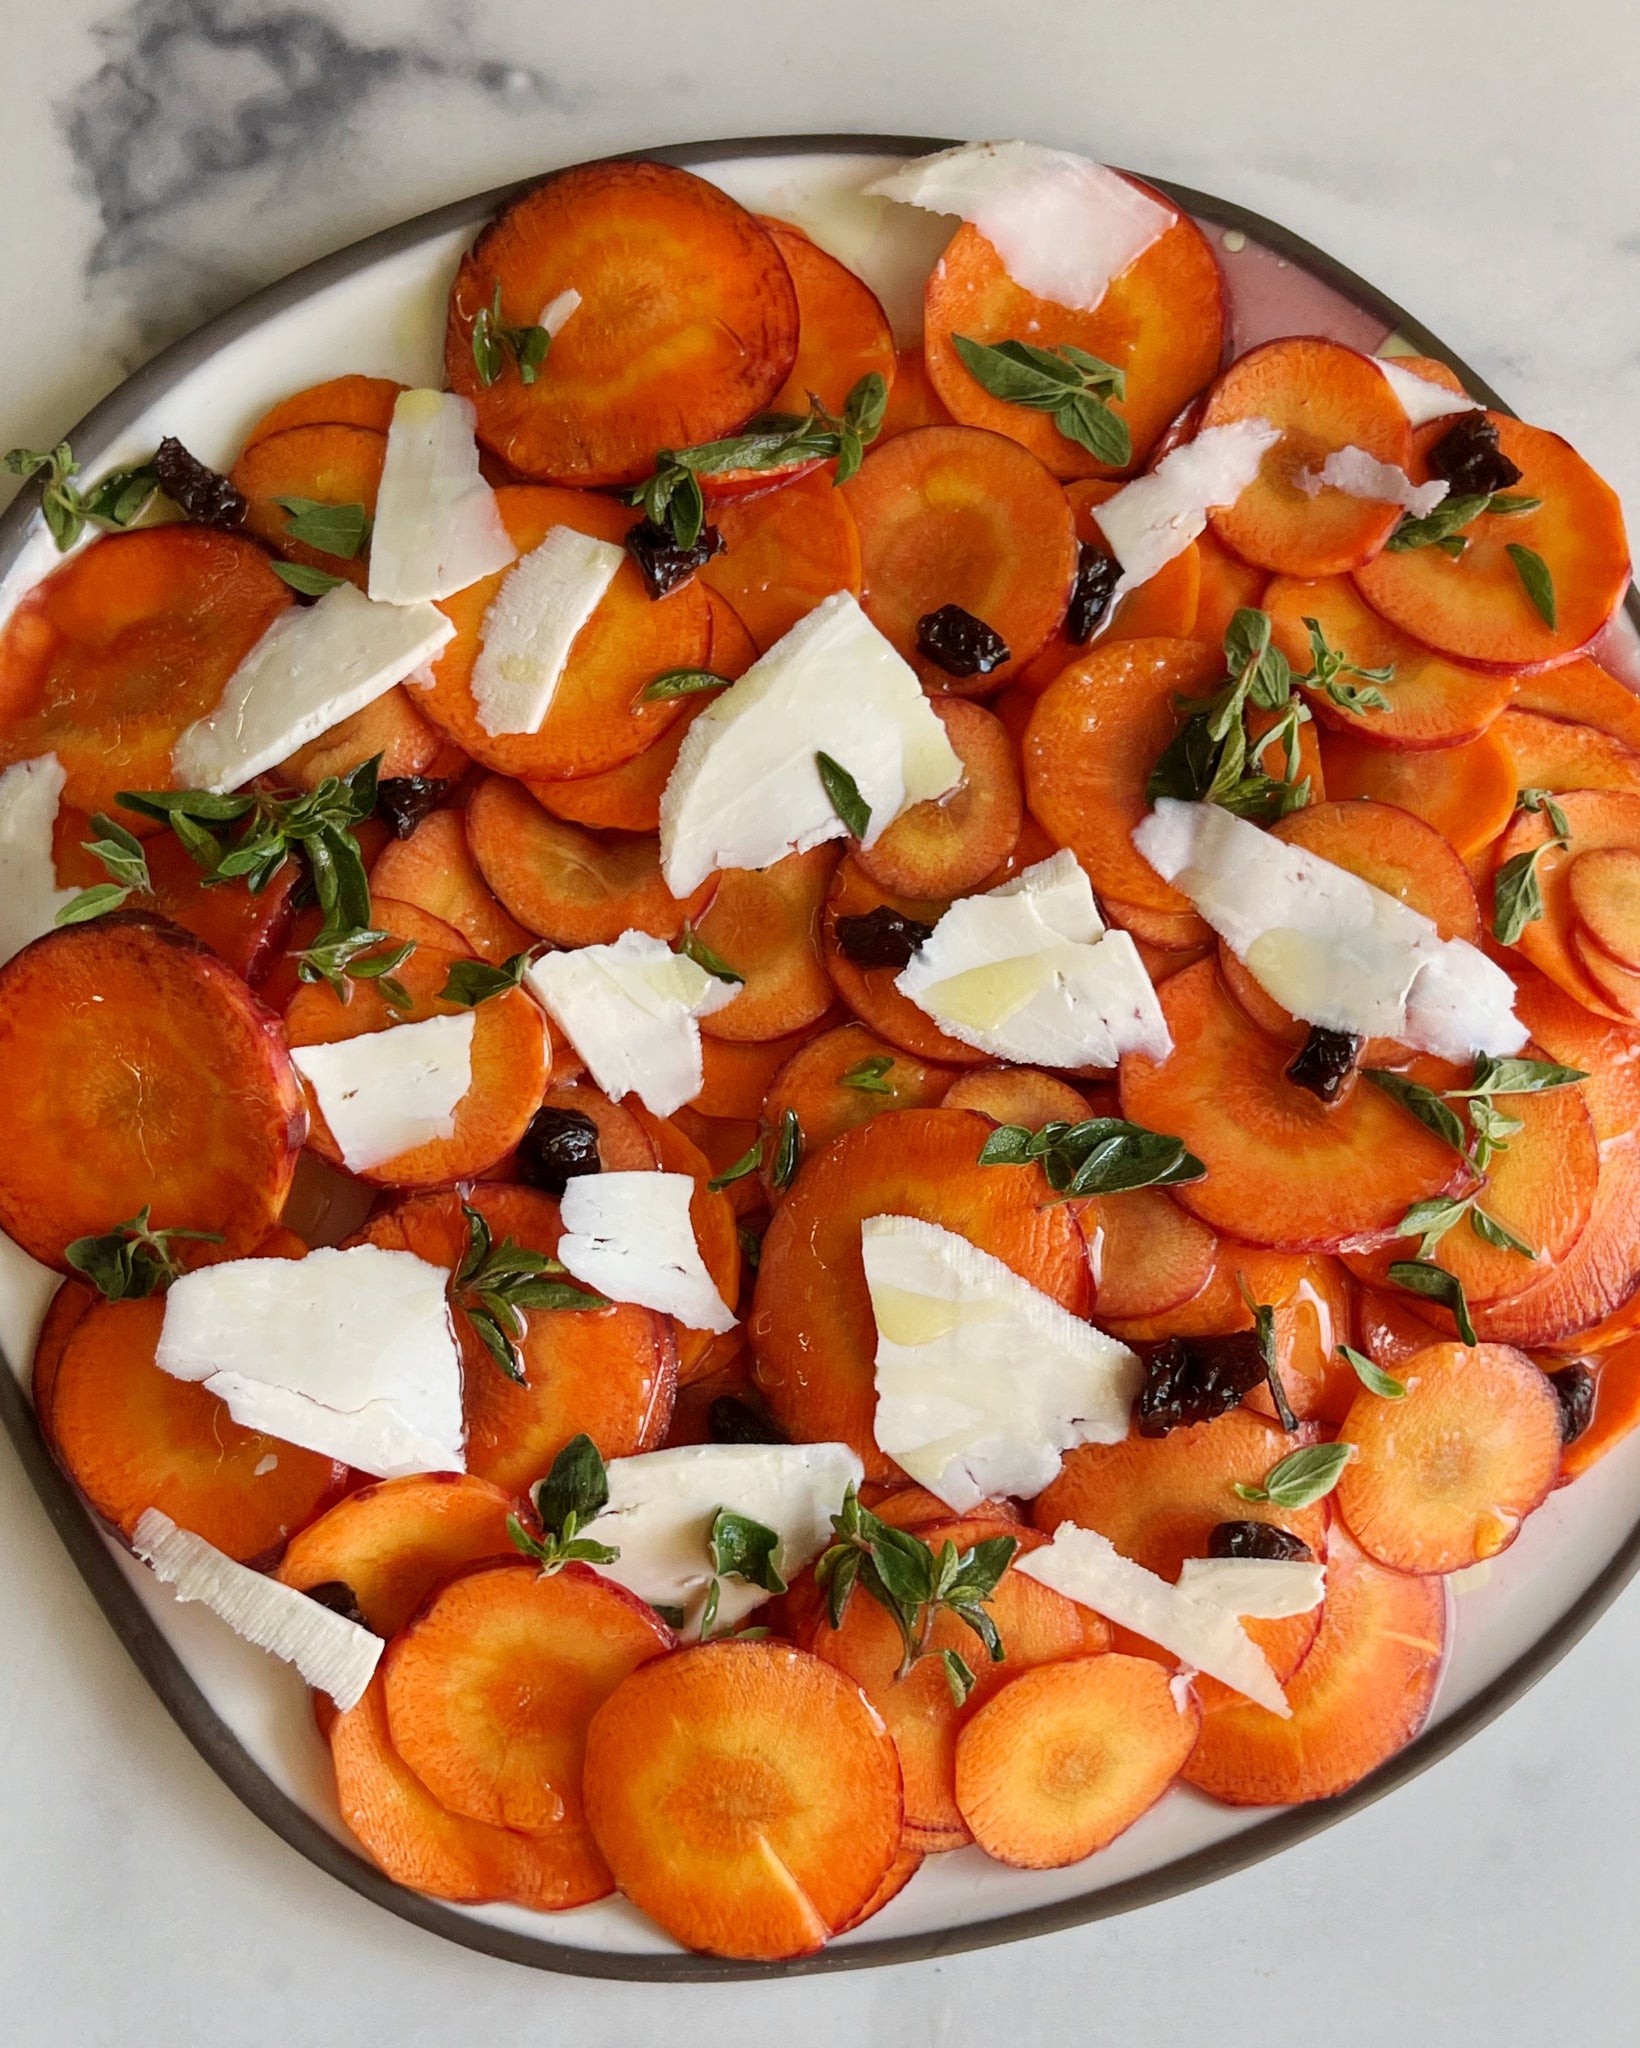 Marinated Carrots with Oregano, Currants & Ricotta Salata